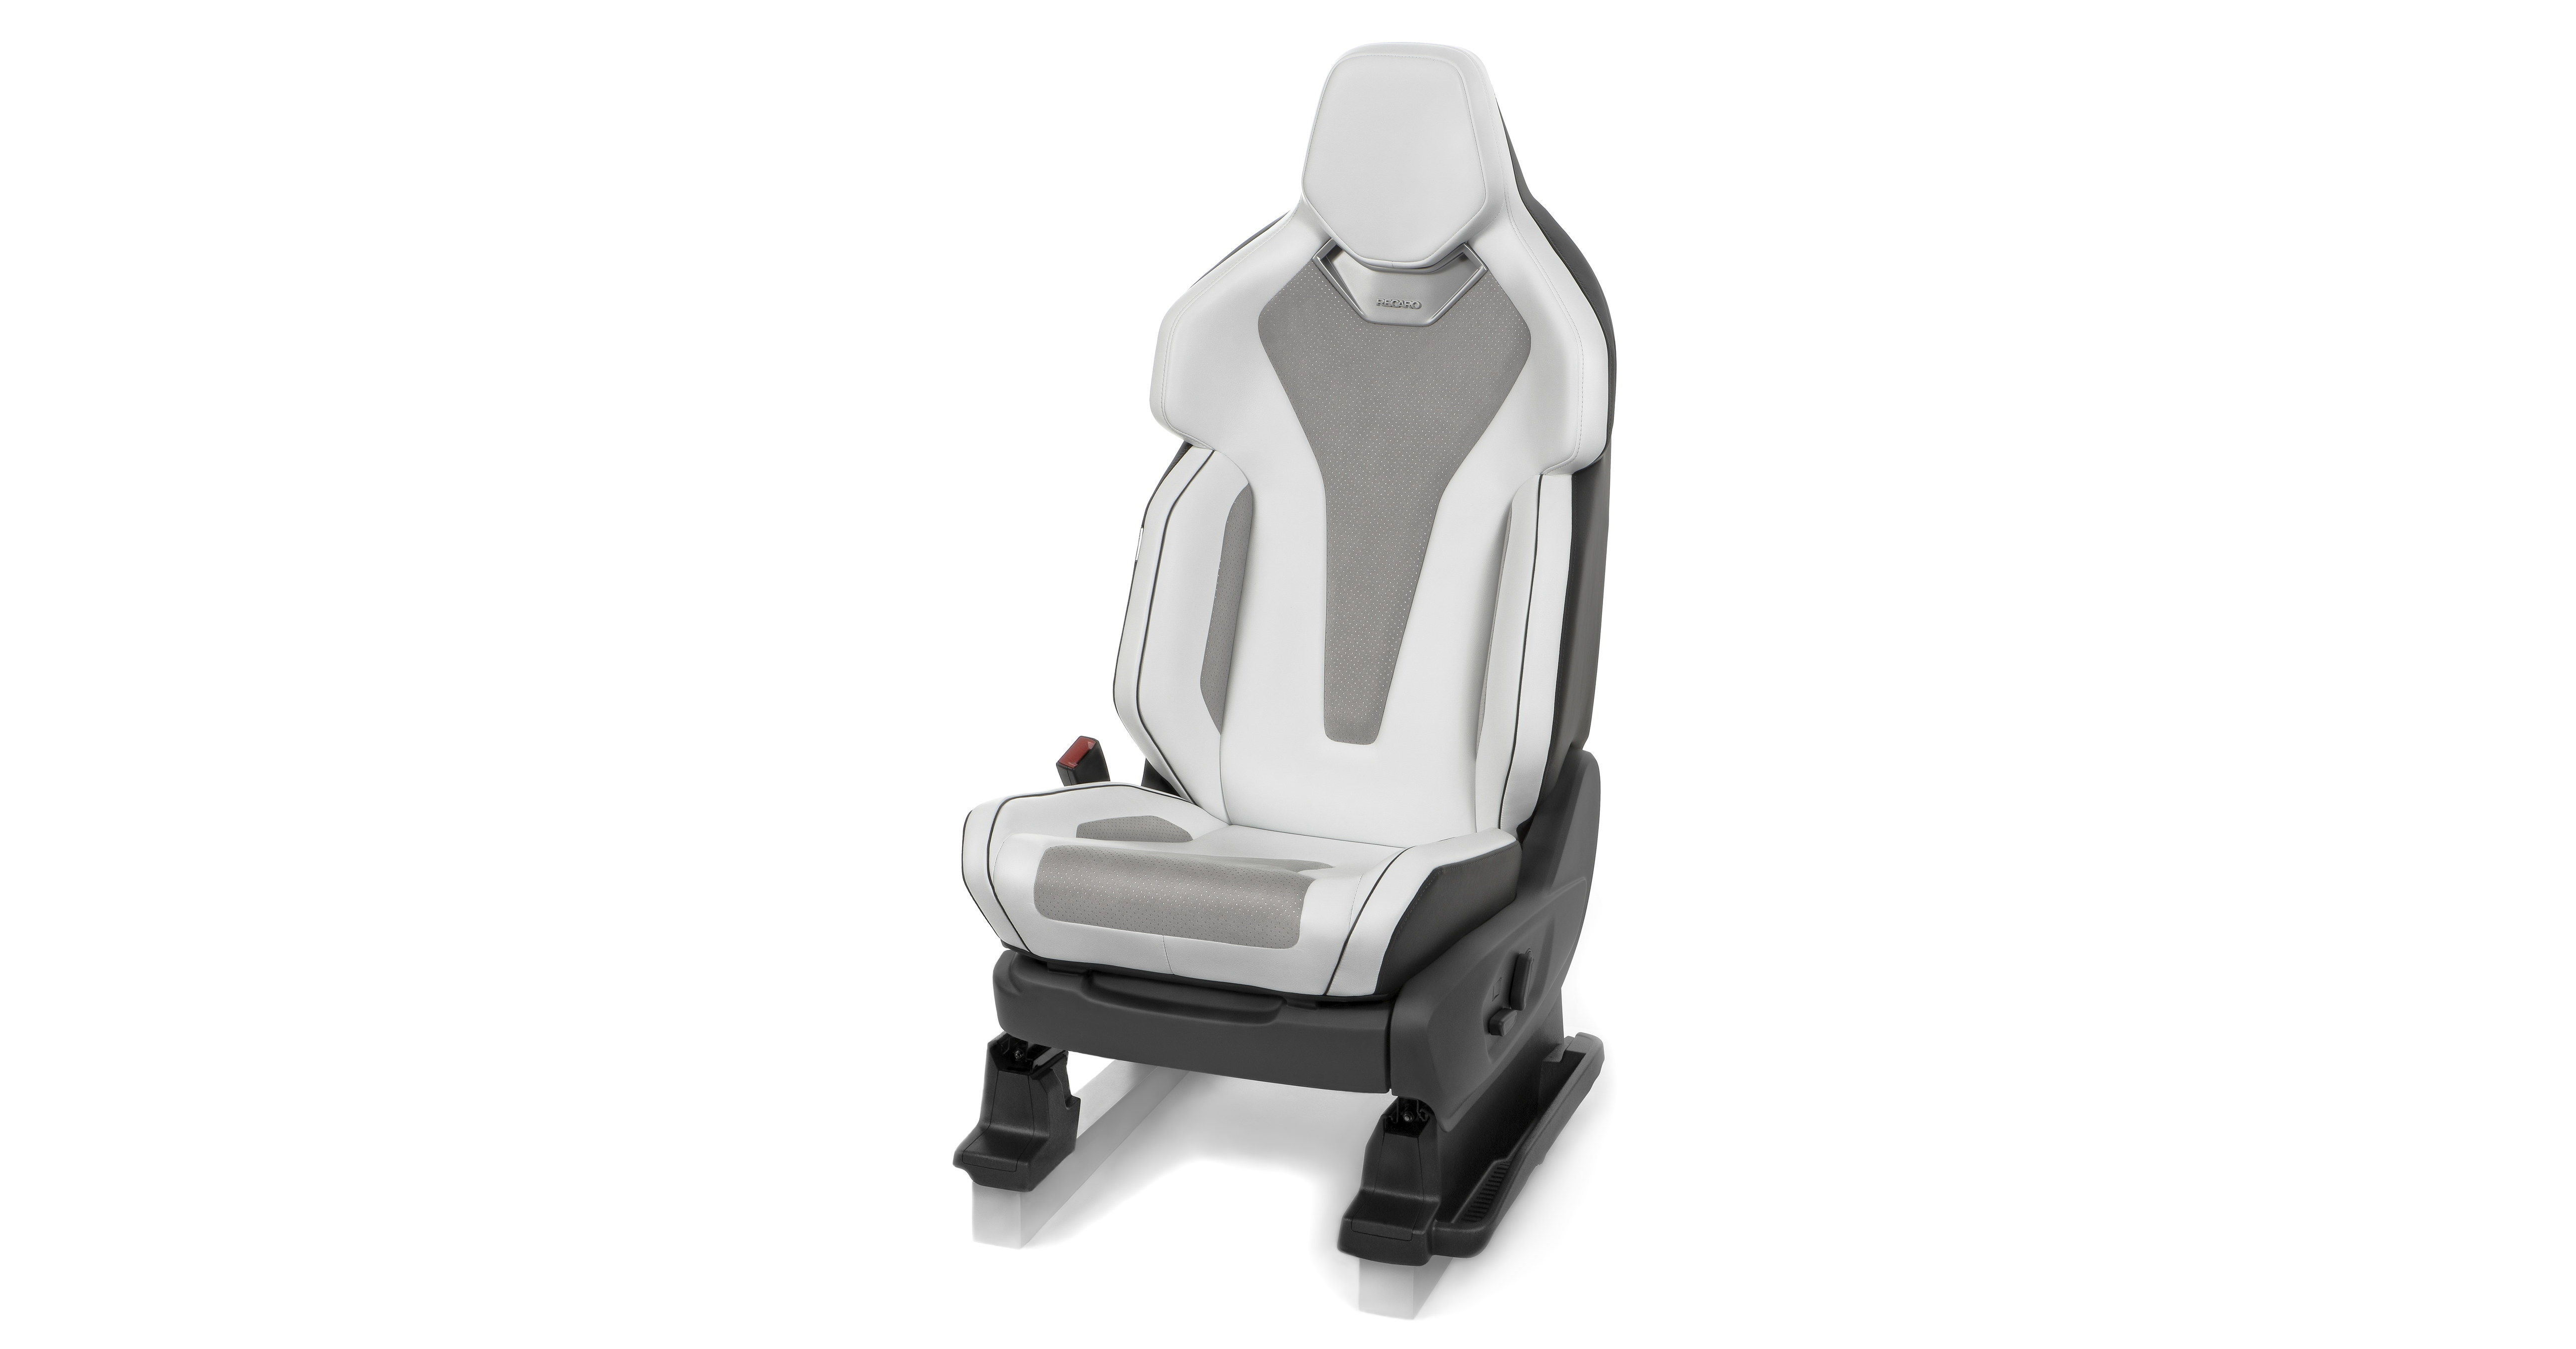 RECARO Automotive Seating unveils three performance seat concepts for all  market segments